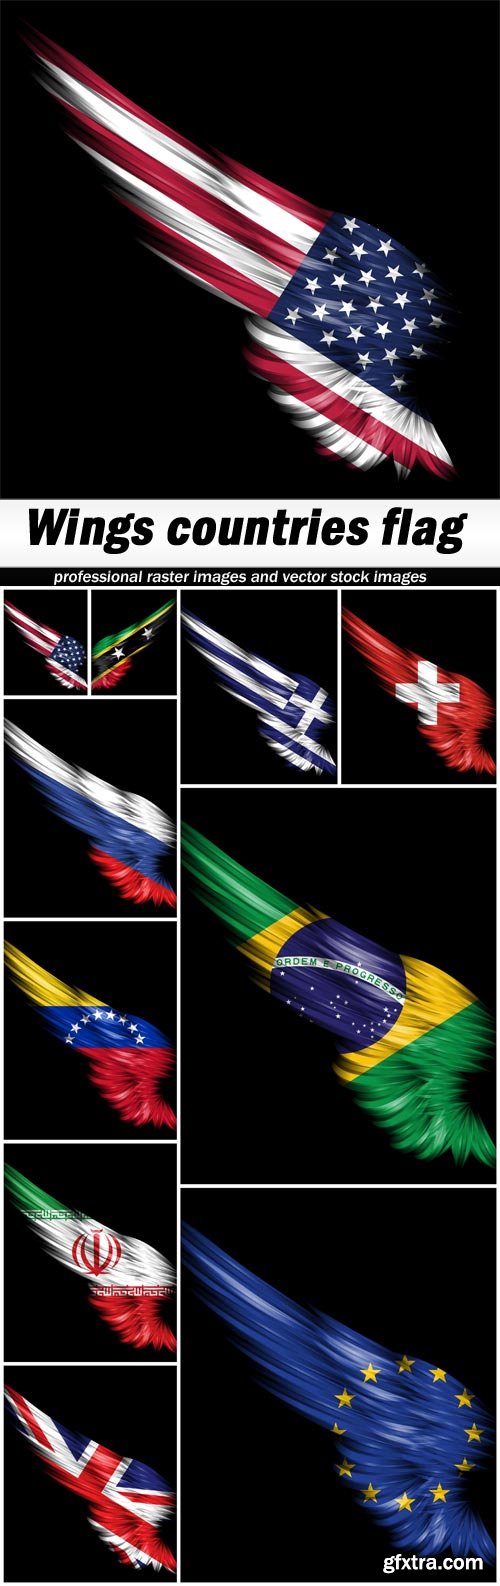 Wings countries flag - 10 UHQ JPEG